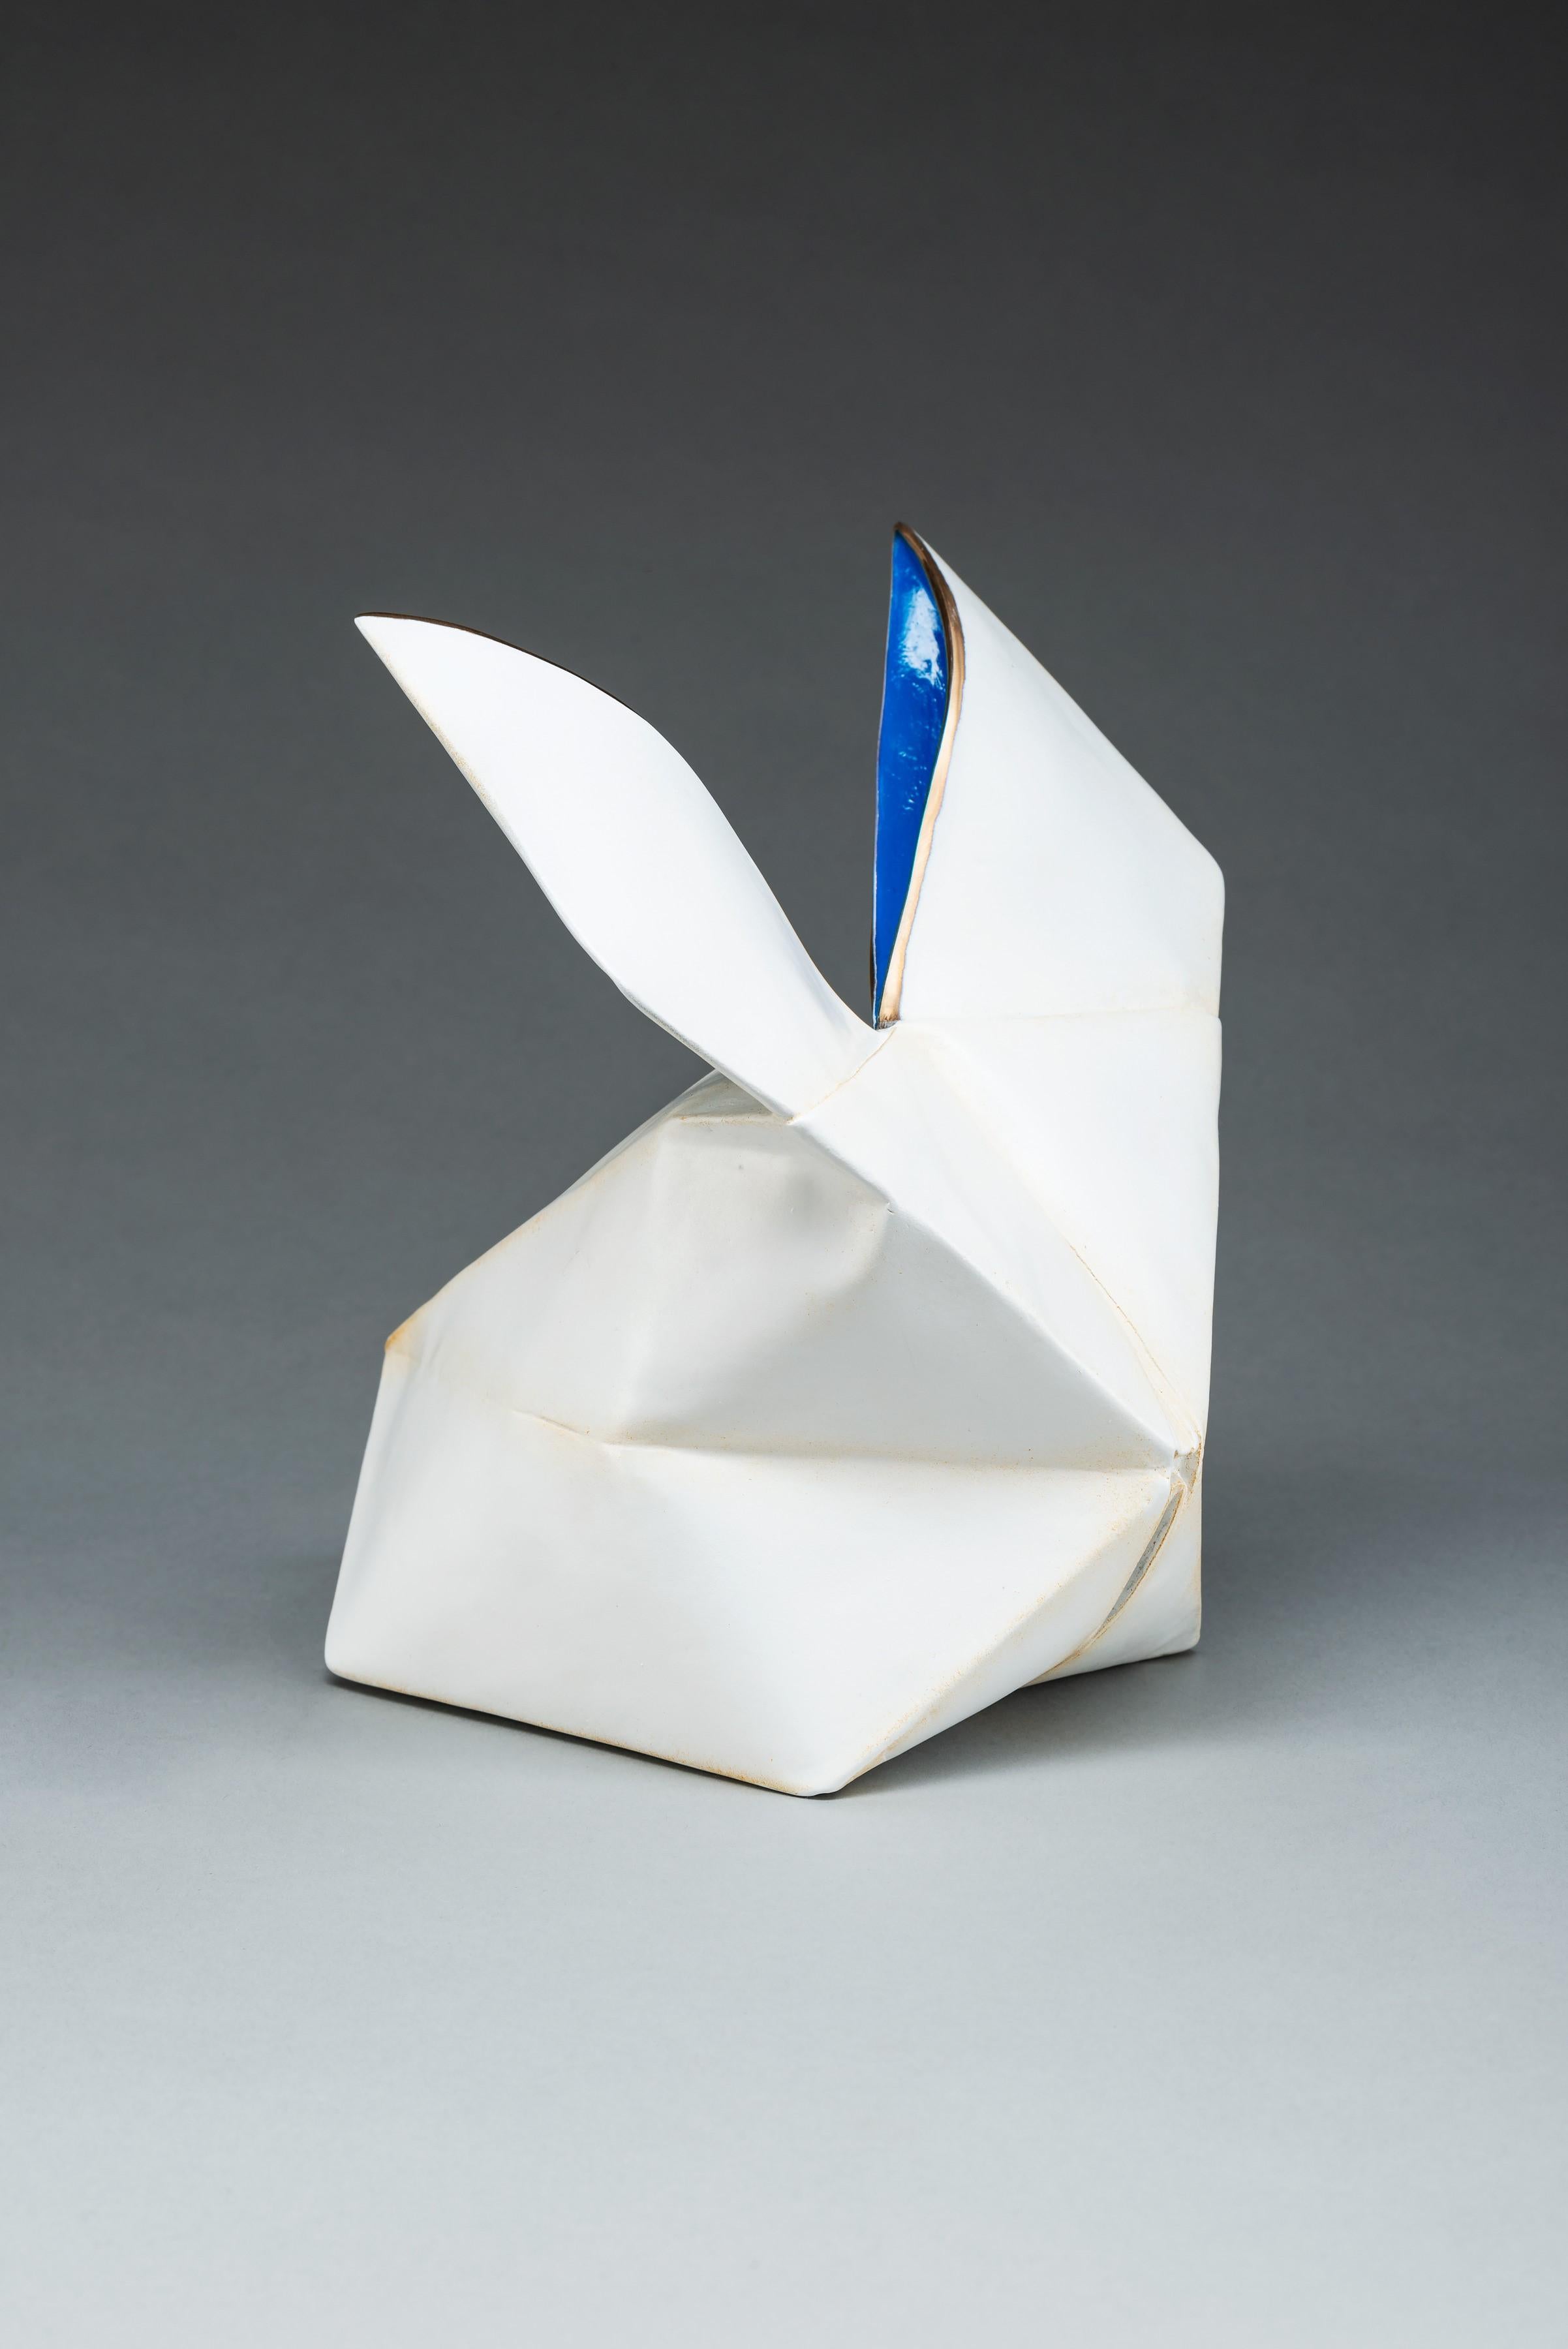 Kevin Box Figurative Sculpture - Blue Bunny 1/50